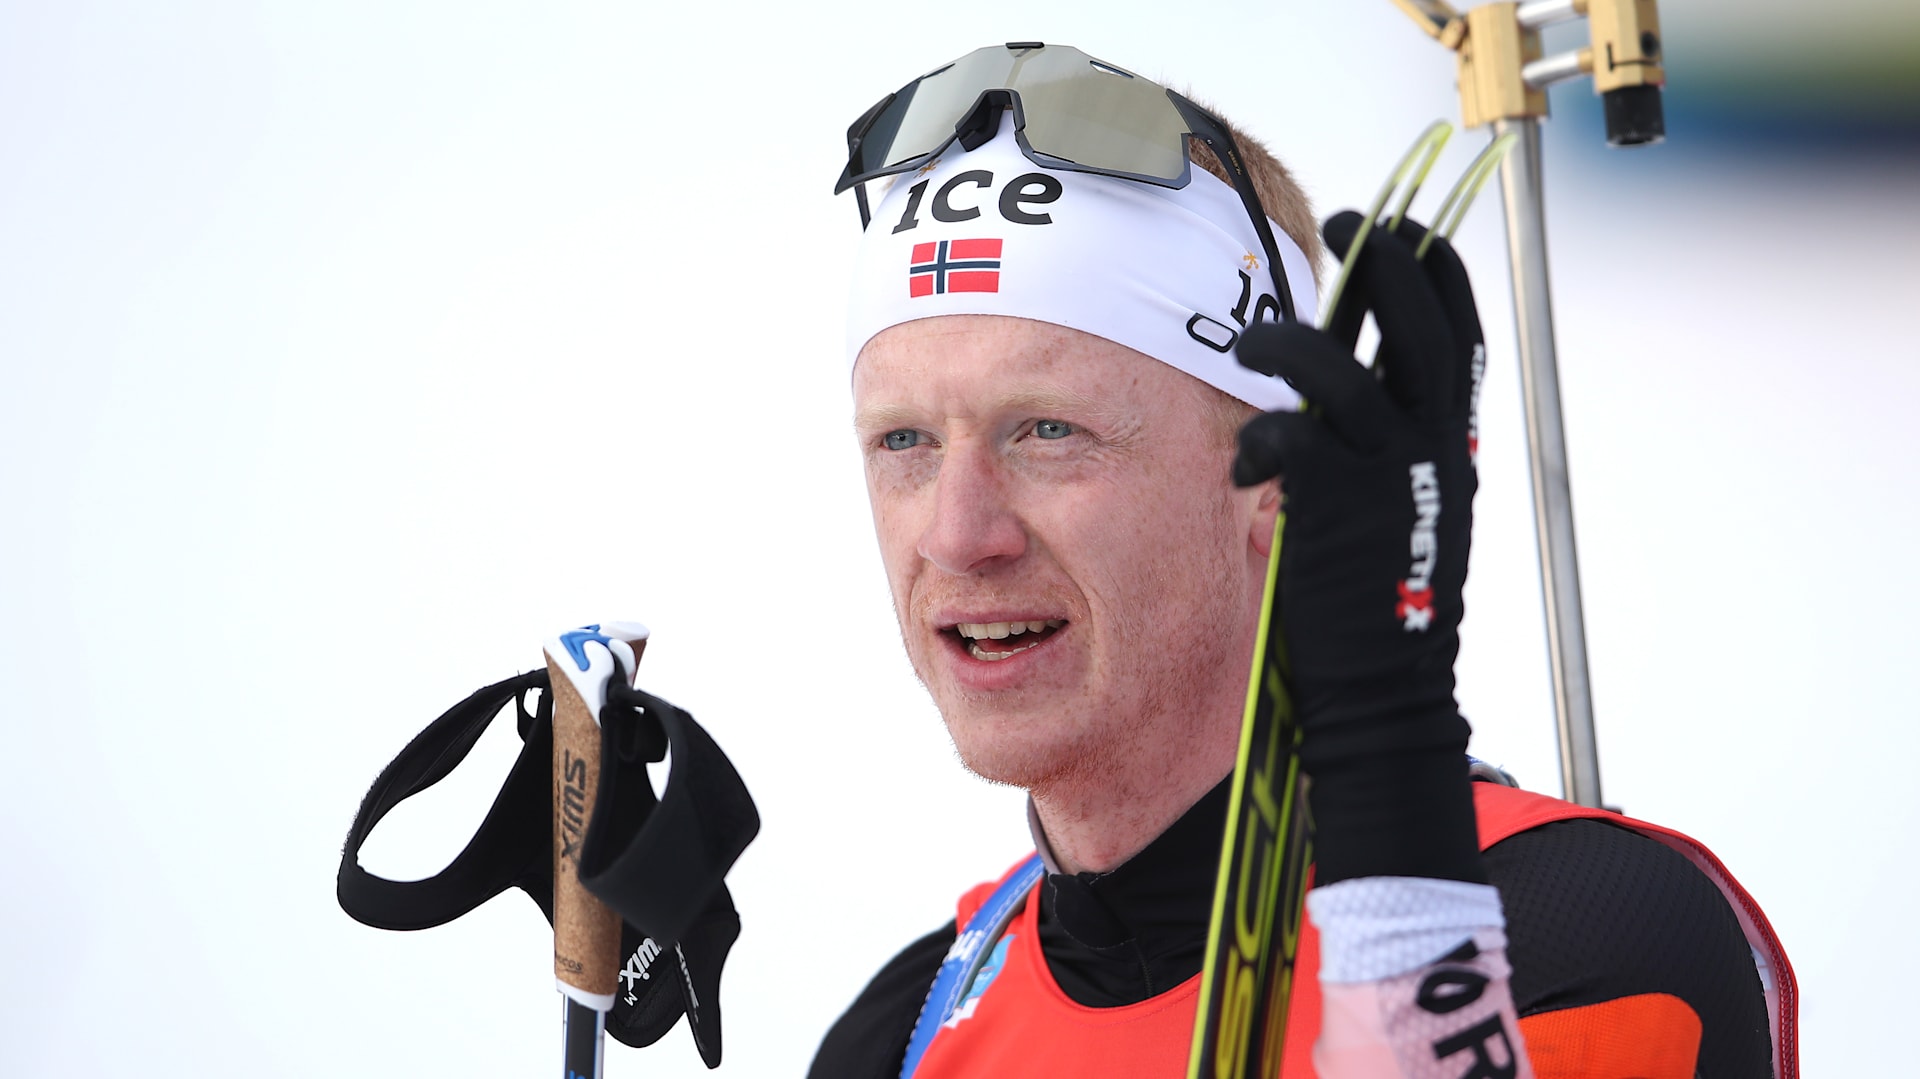 Johannes Thingnes Boe on top at start of 2020-21 Biathlon World Cup